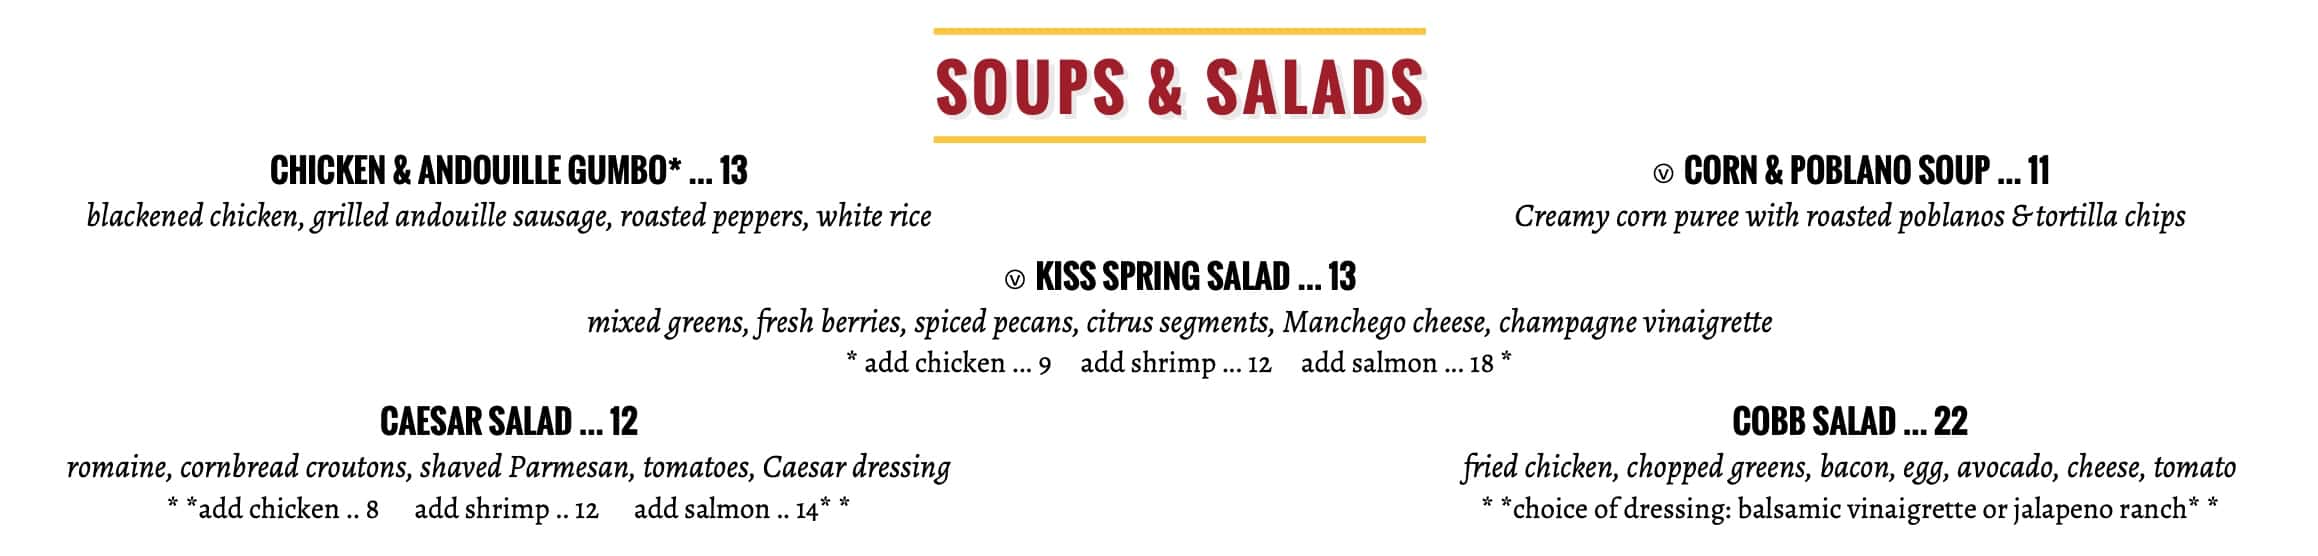 Kiss Restaurant Soups and Salads Menu